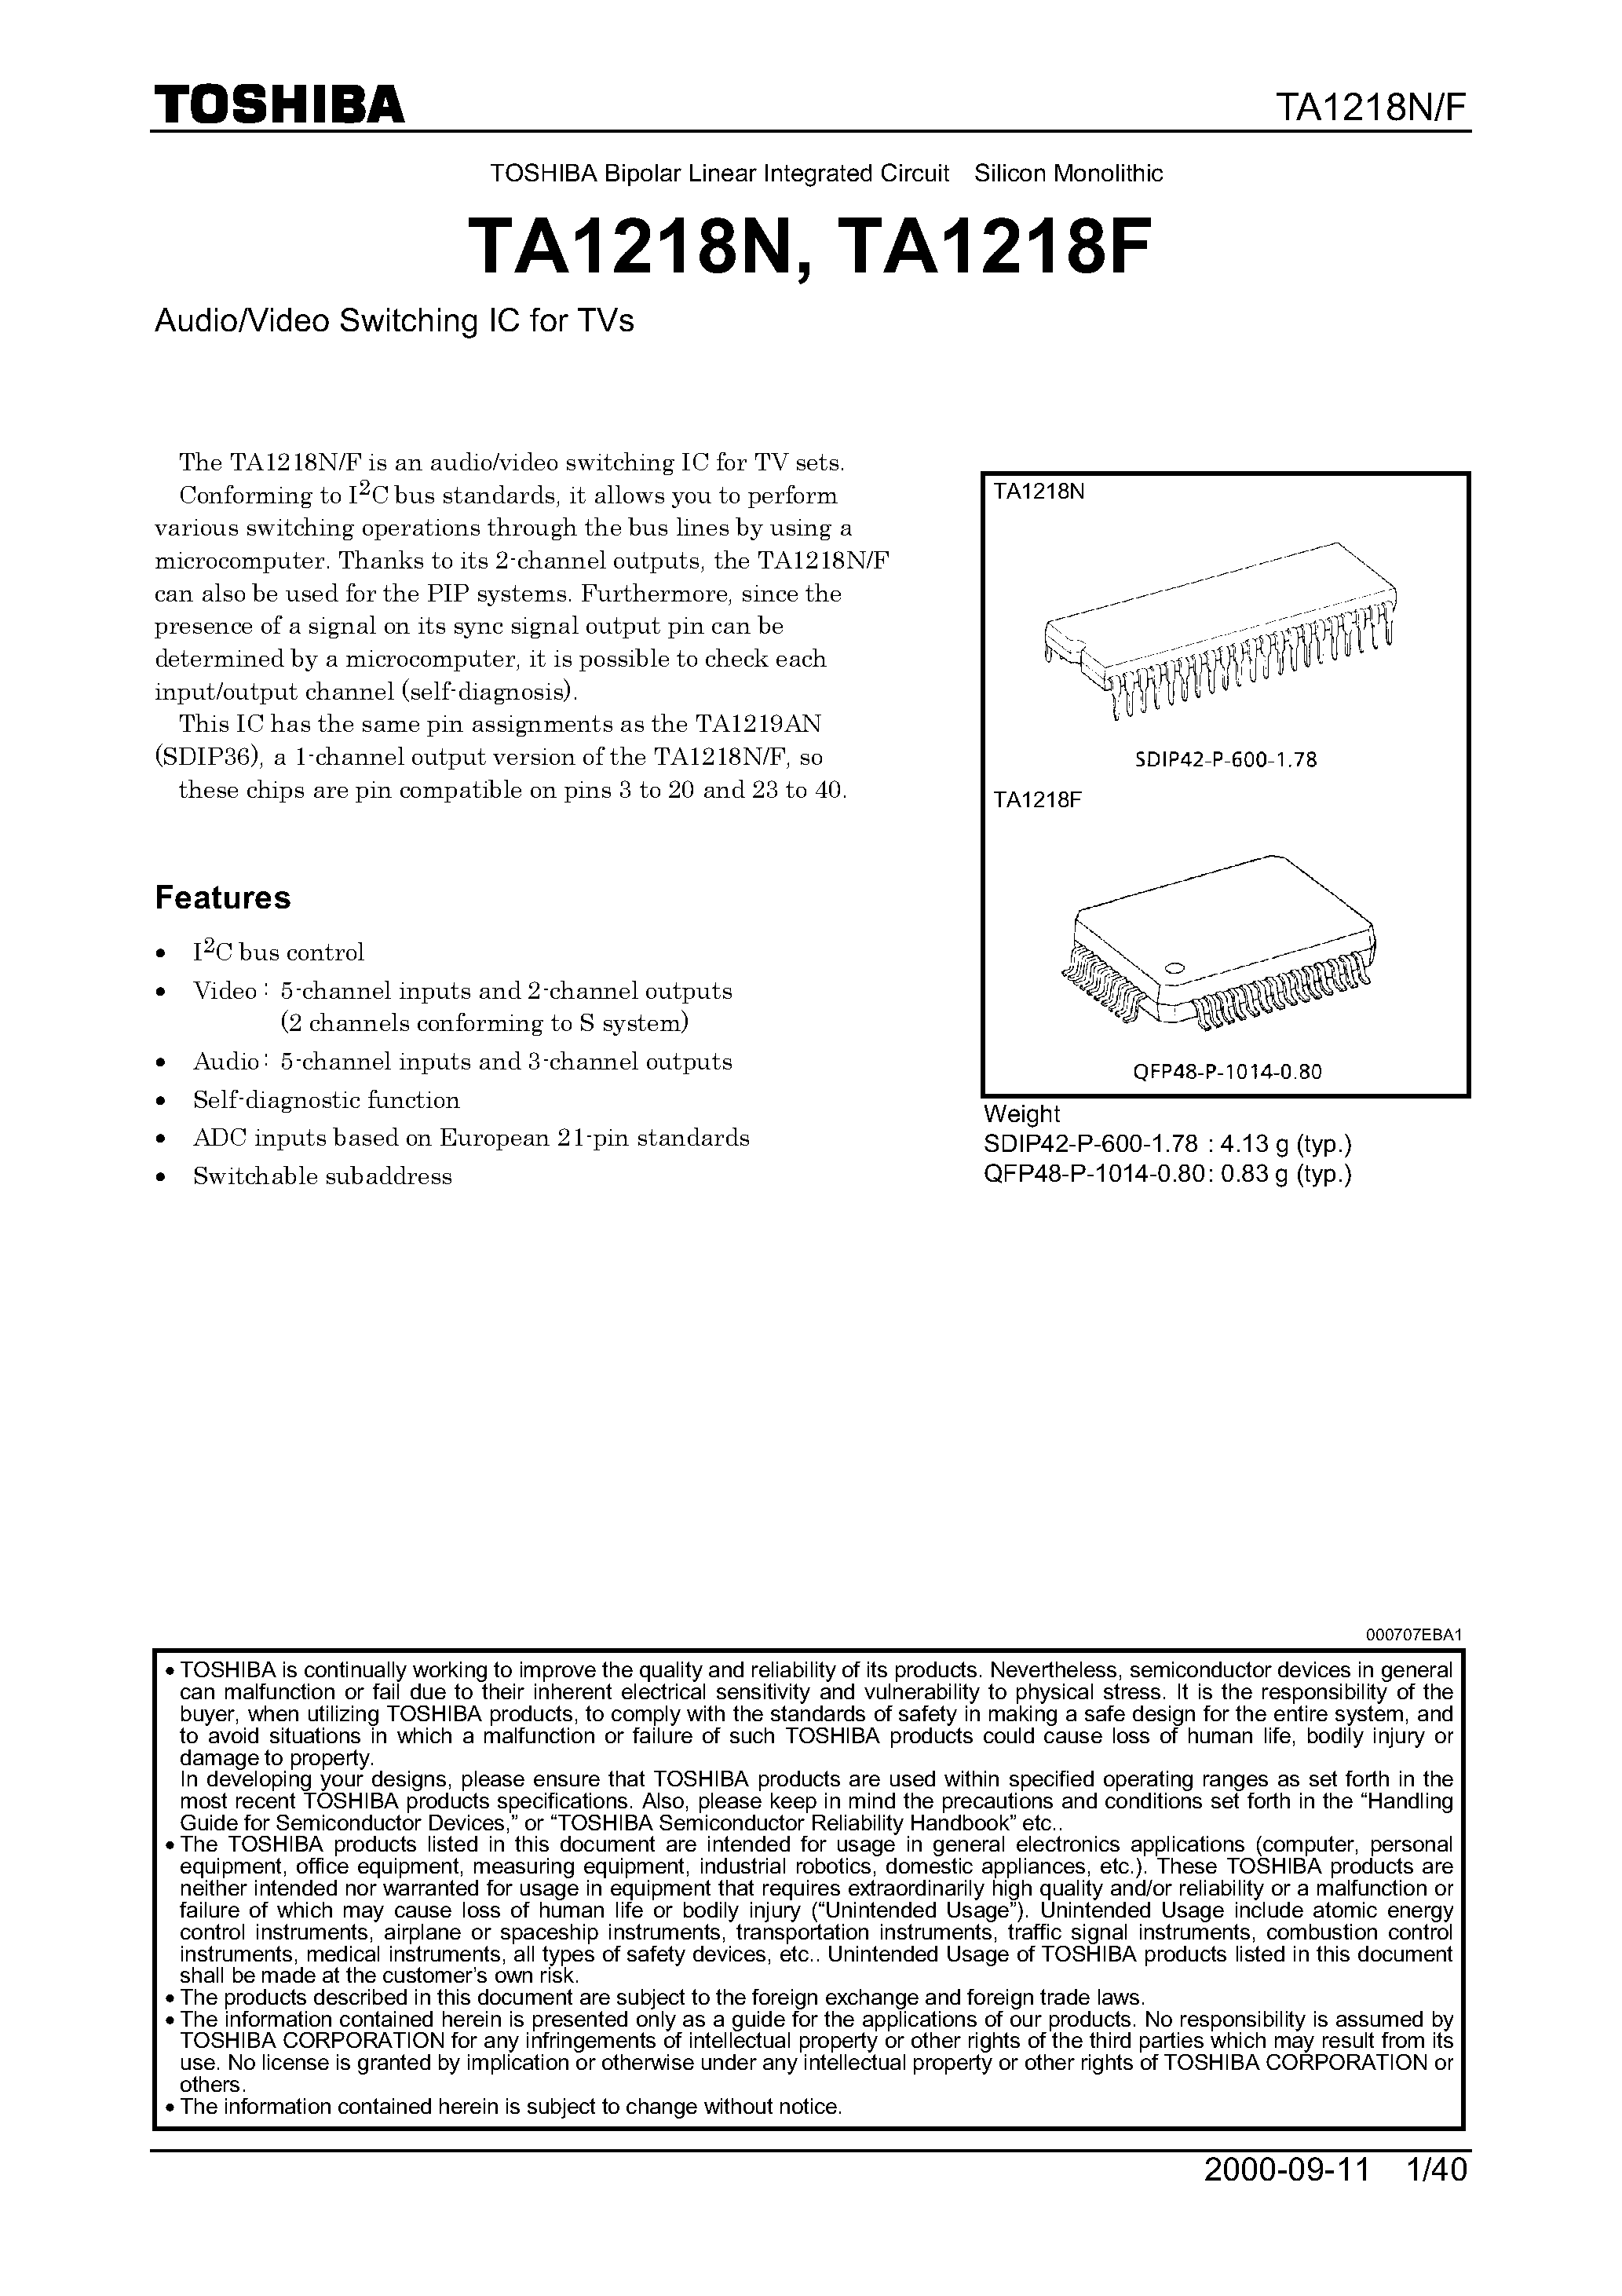 Datasheet TA1218 - TOSHIBA Bipolar Linear Integrated Circuit Silicon Monolithic page 1